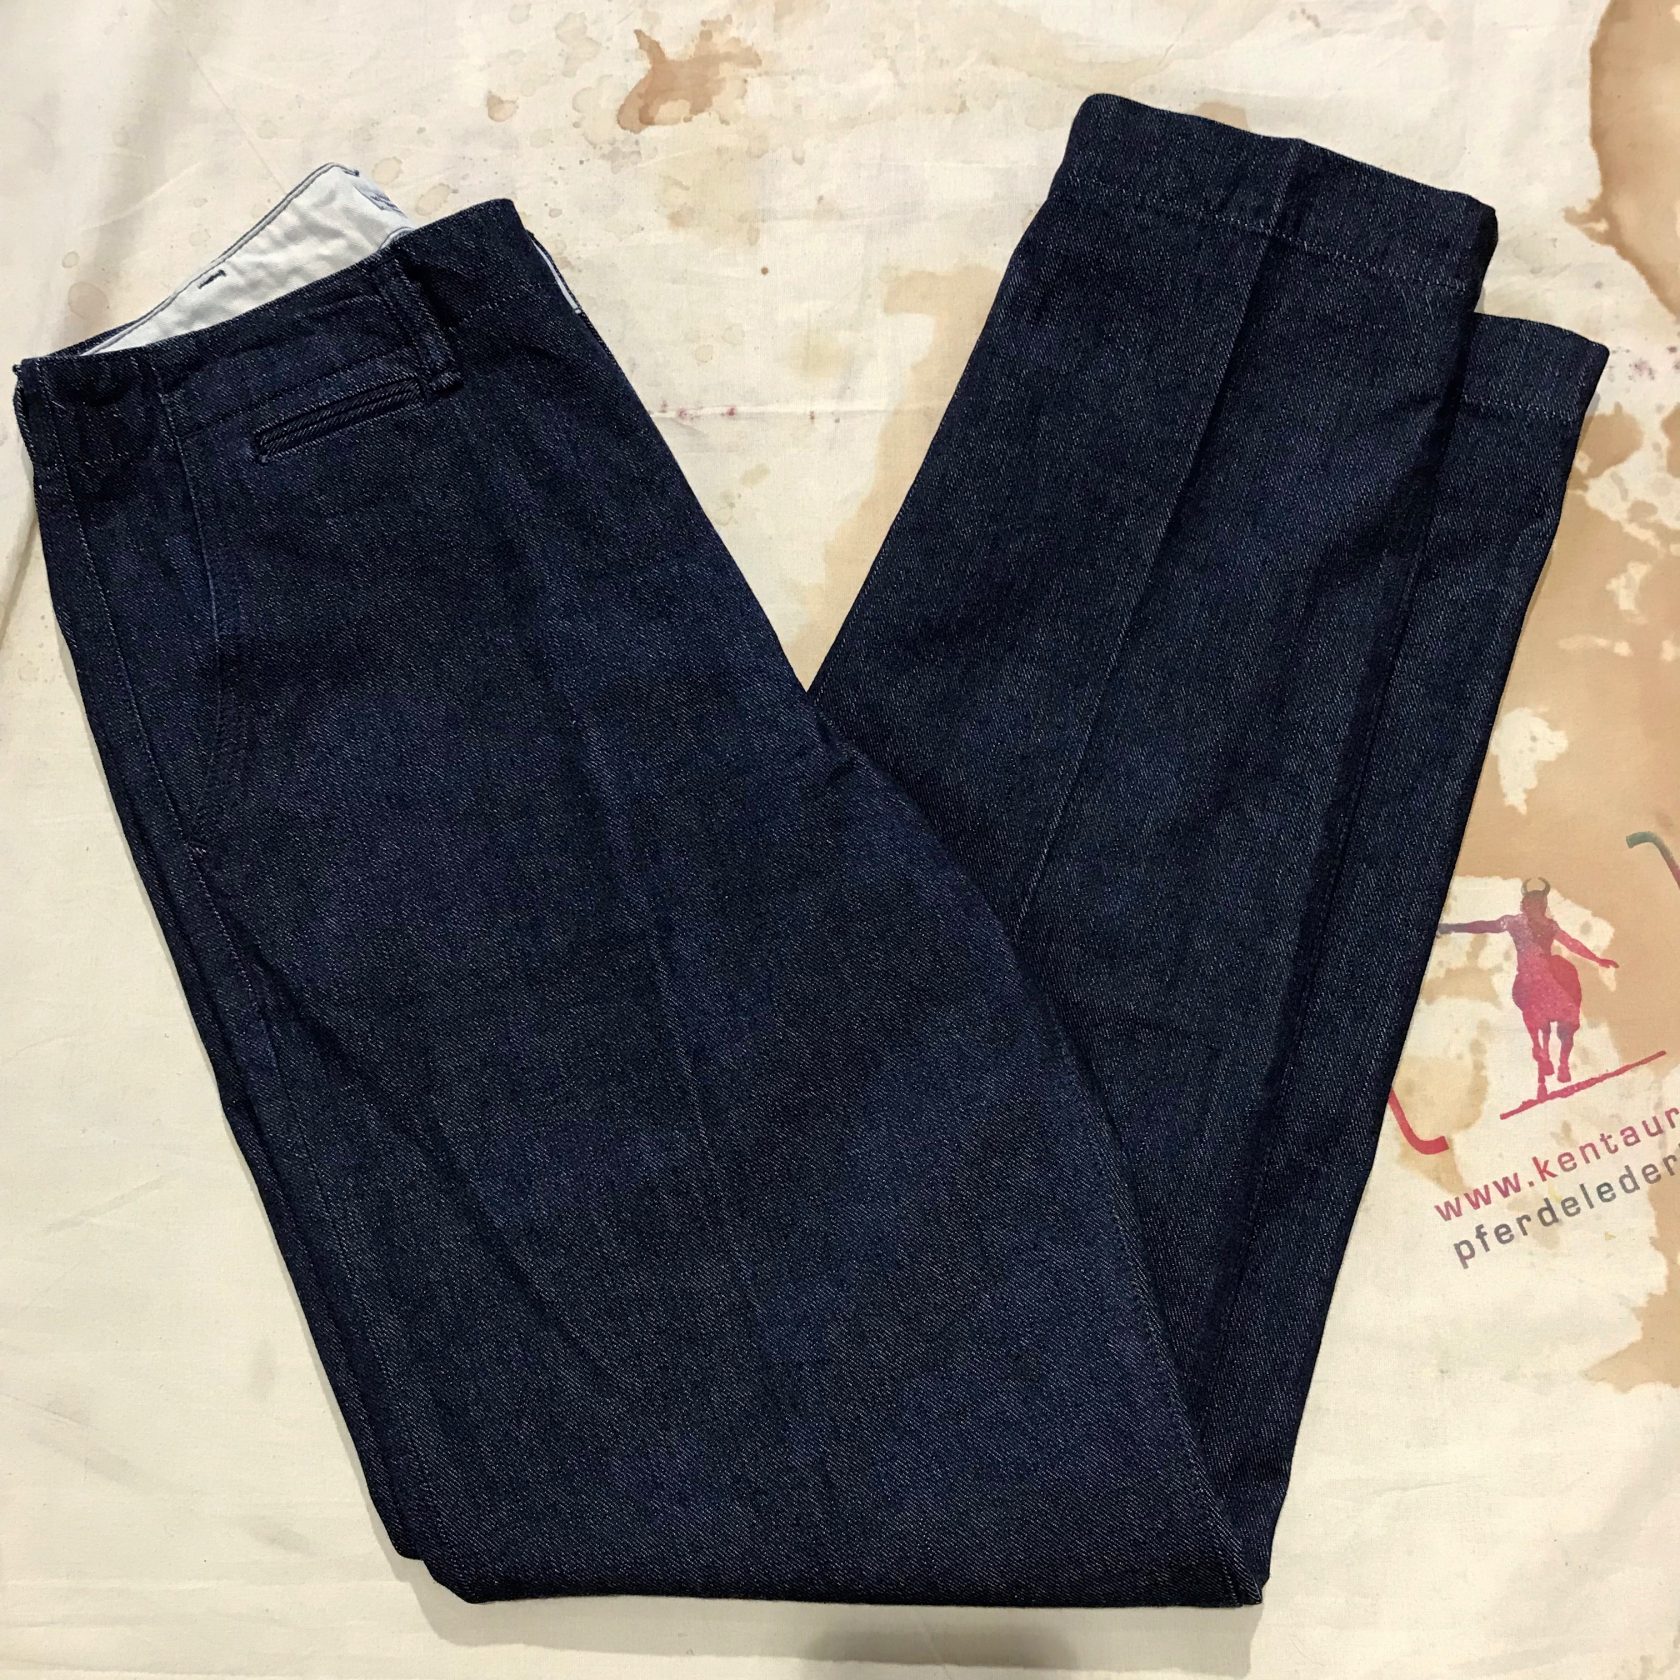 Momotaro modern military denim jeans